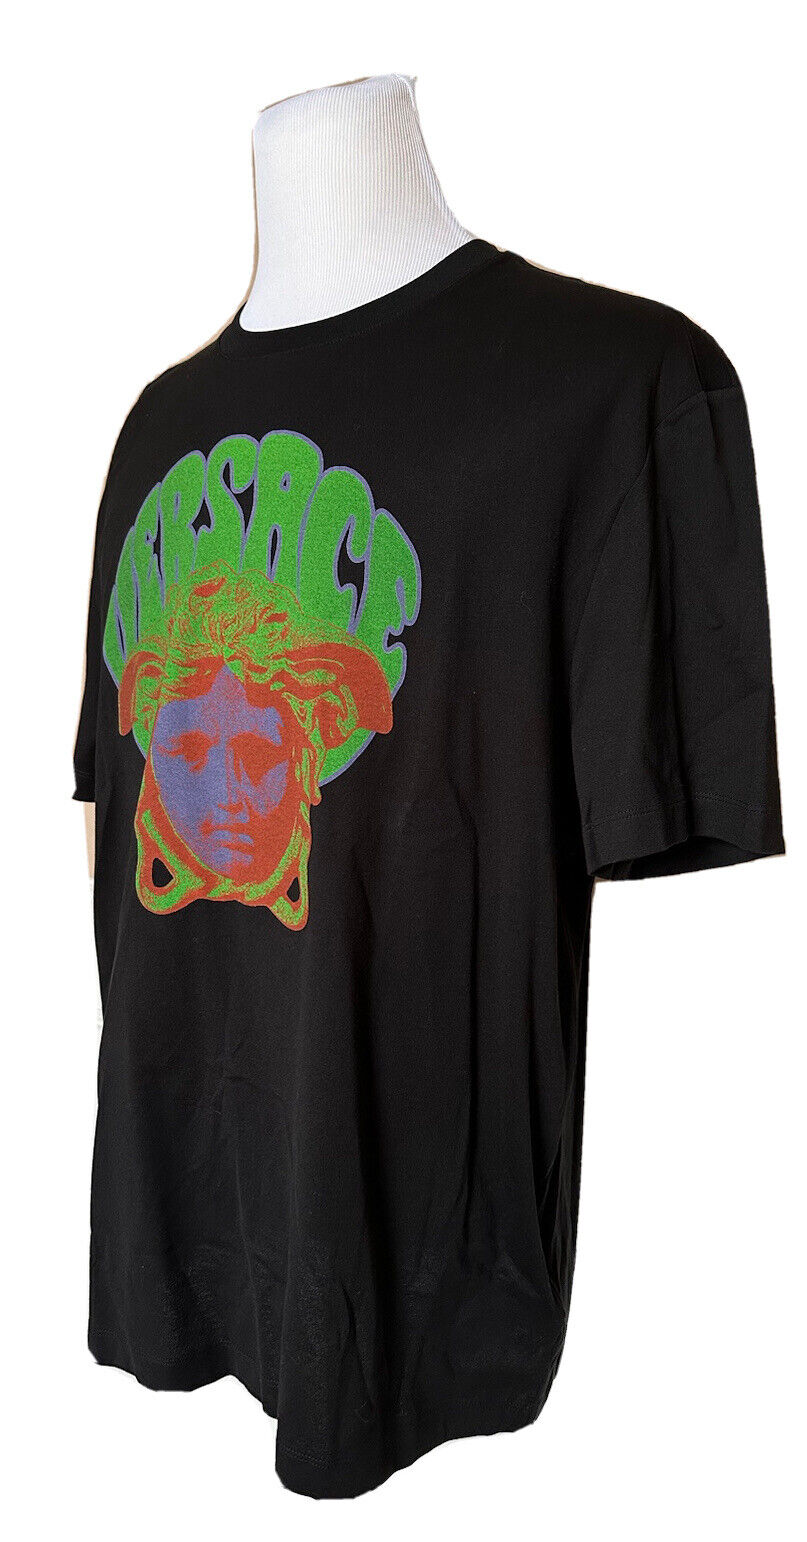 NWT $450 Versace Medusa Printed Black Mitchel Fit Jersey T-Shirt XL 1003916